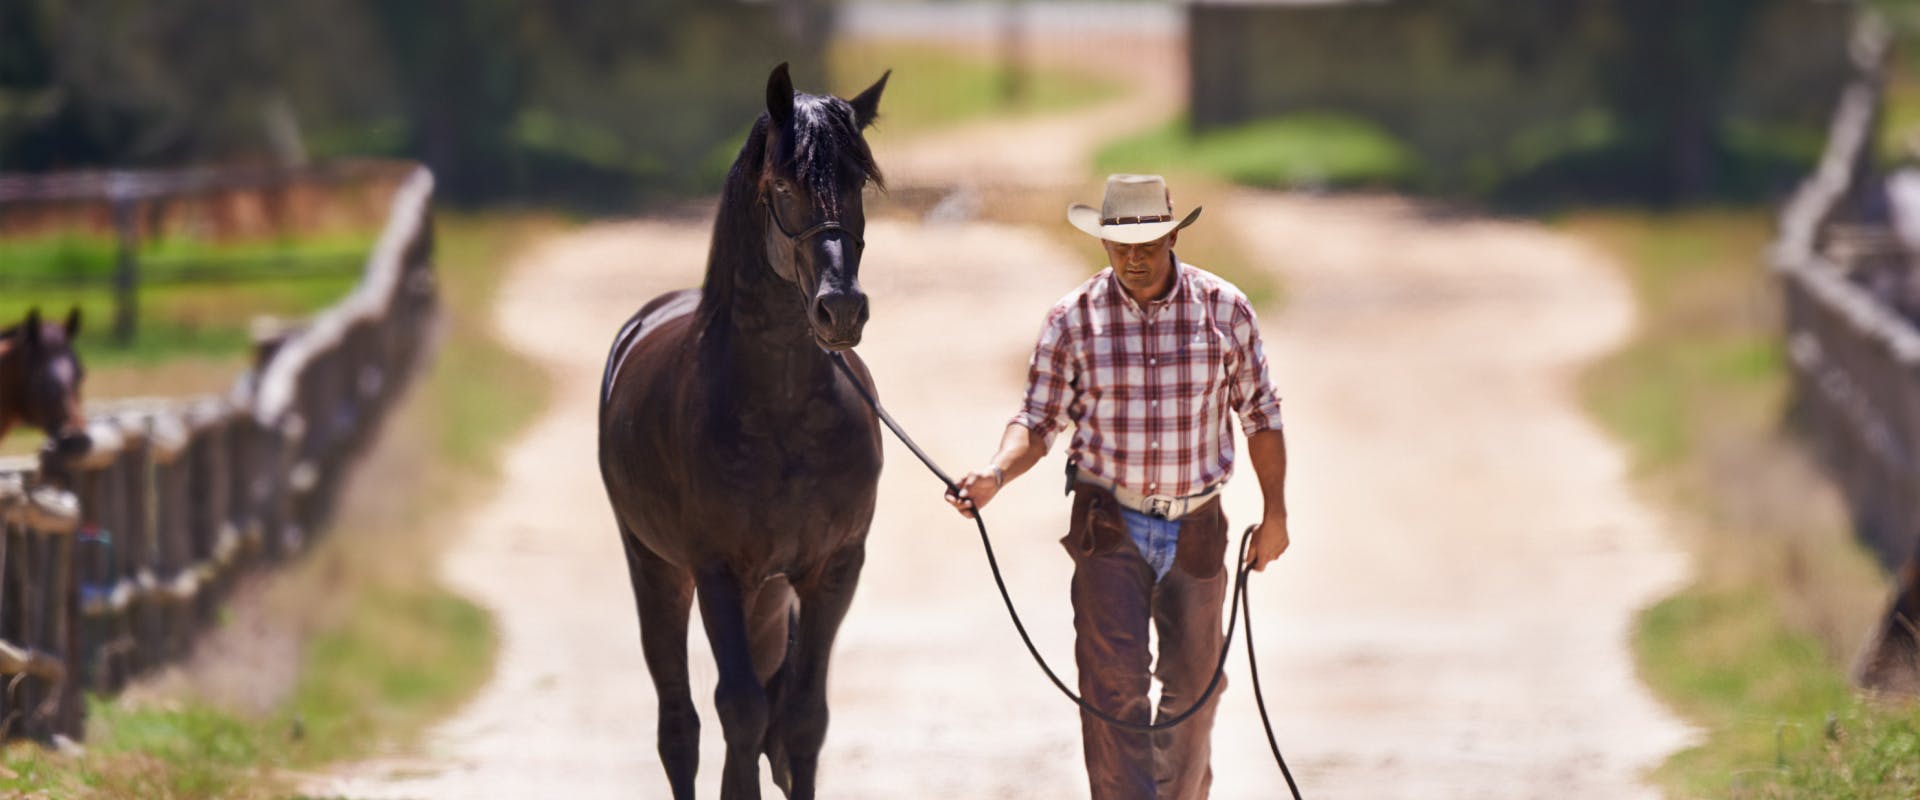 a cowboy walking a horse down a dusty road at a ranch